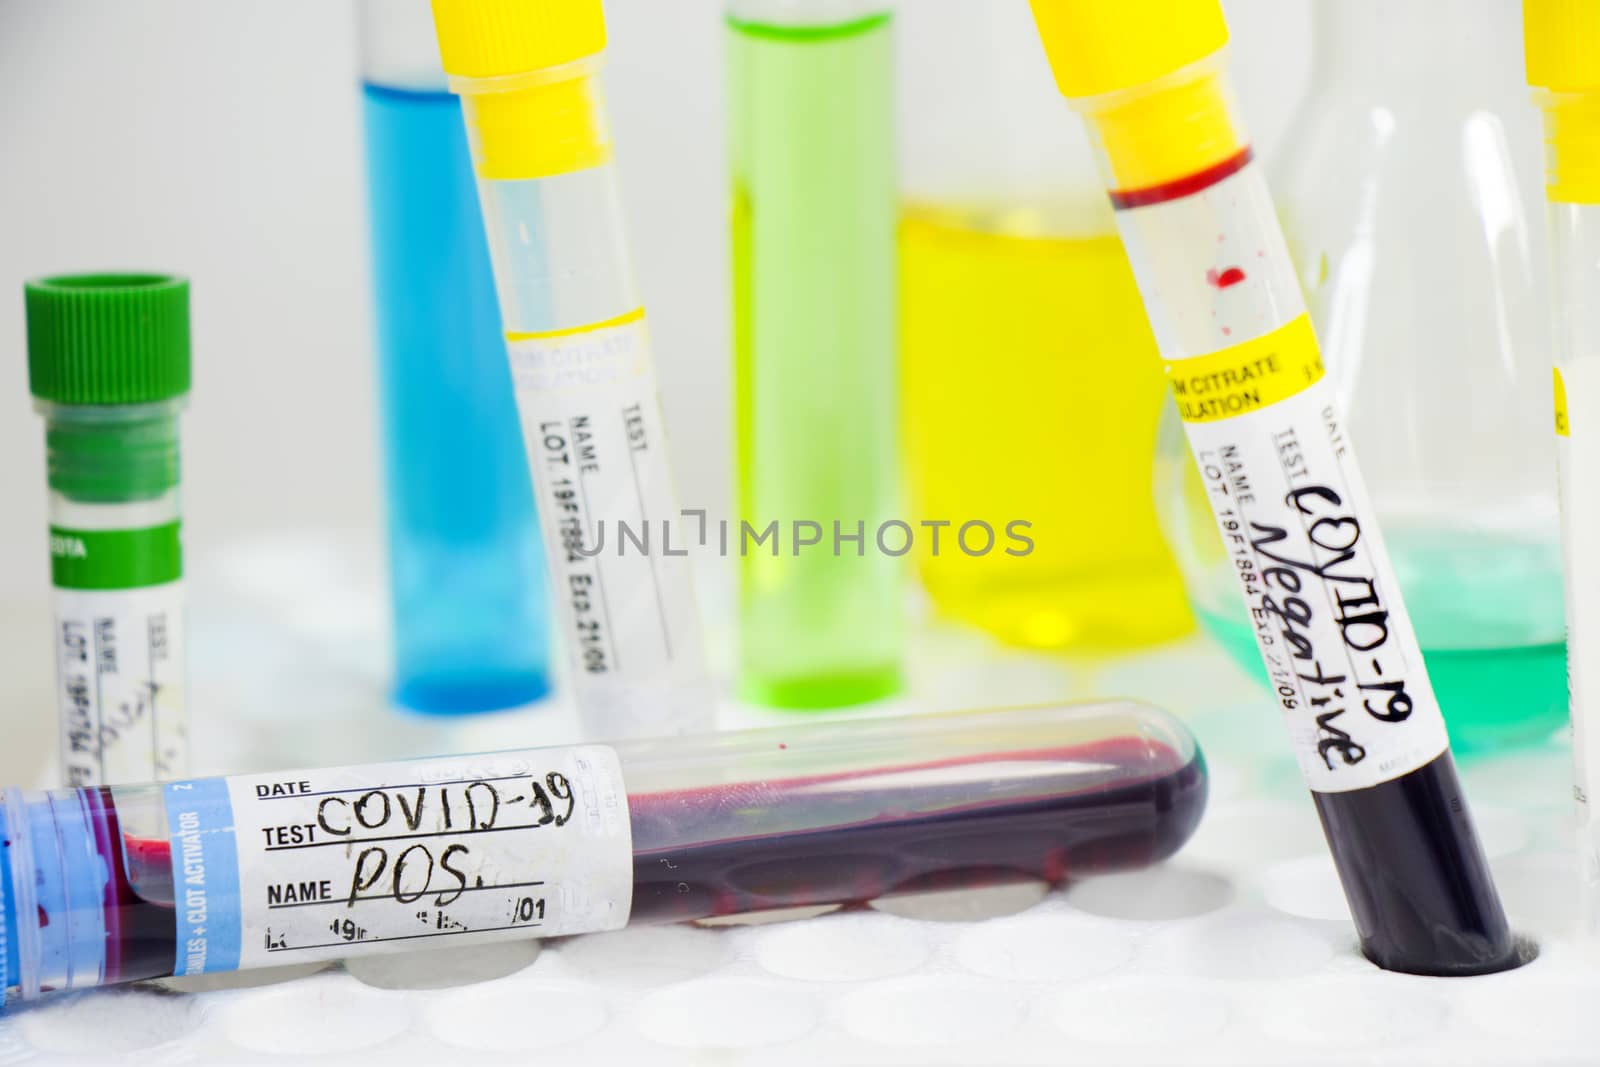 Covid - 19 and corona virus blood test sample, negative and positive by Taidundua